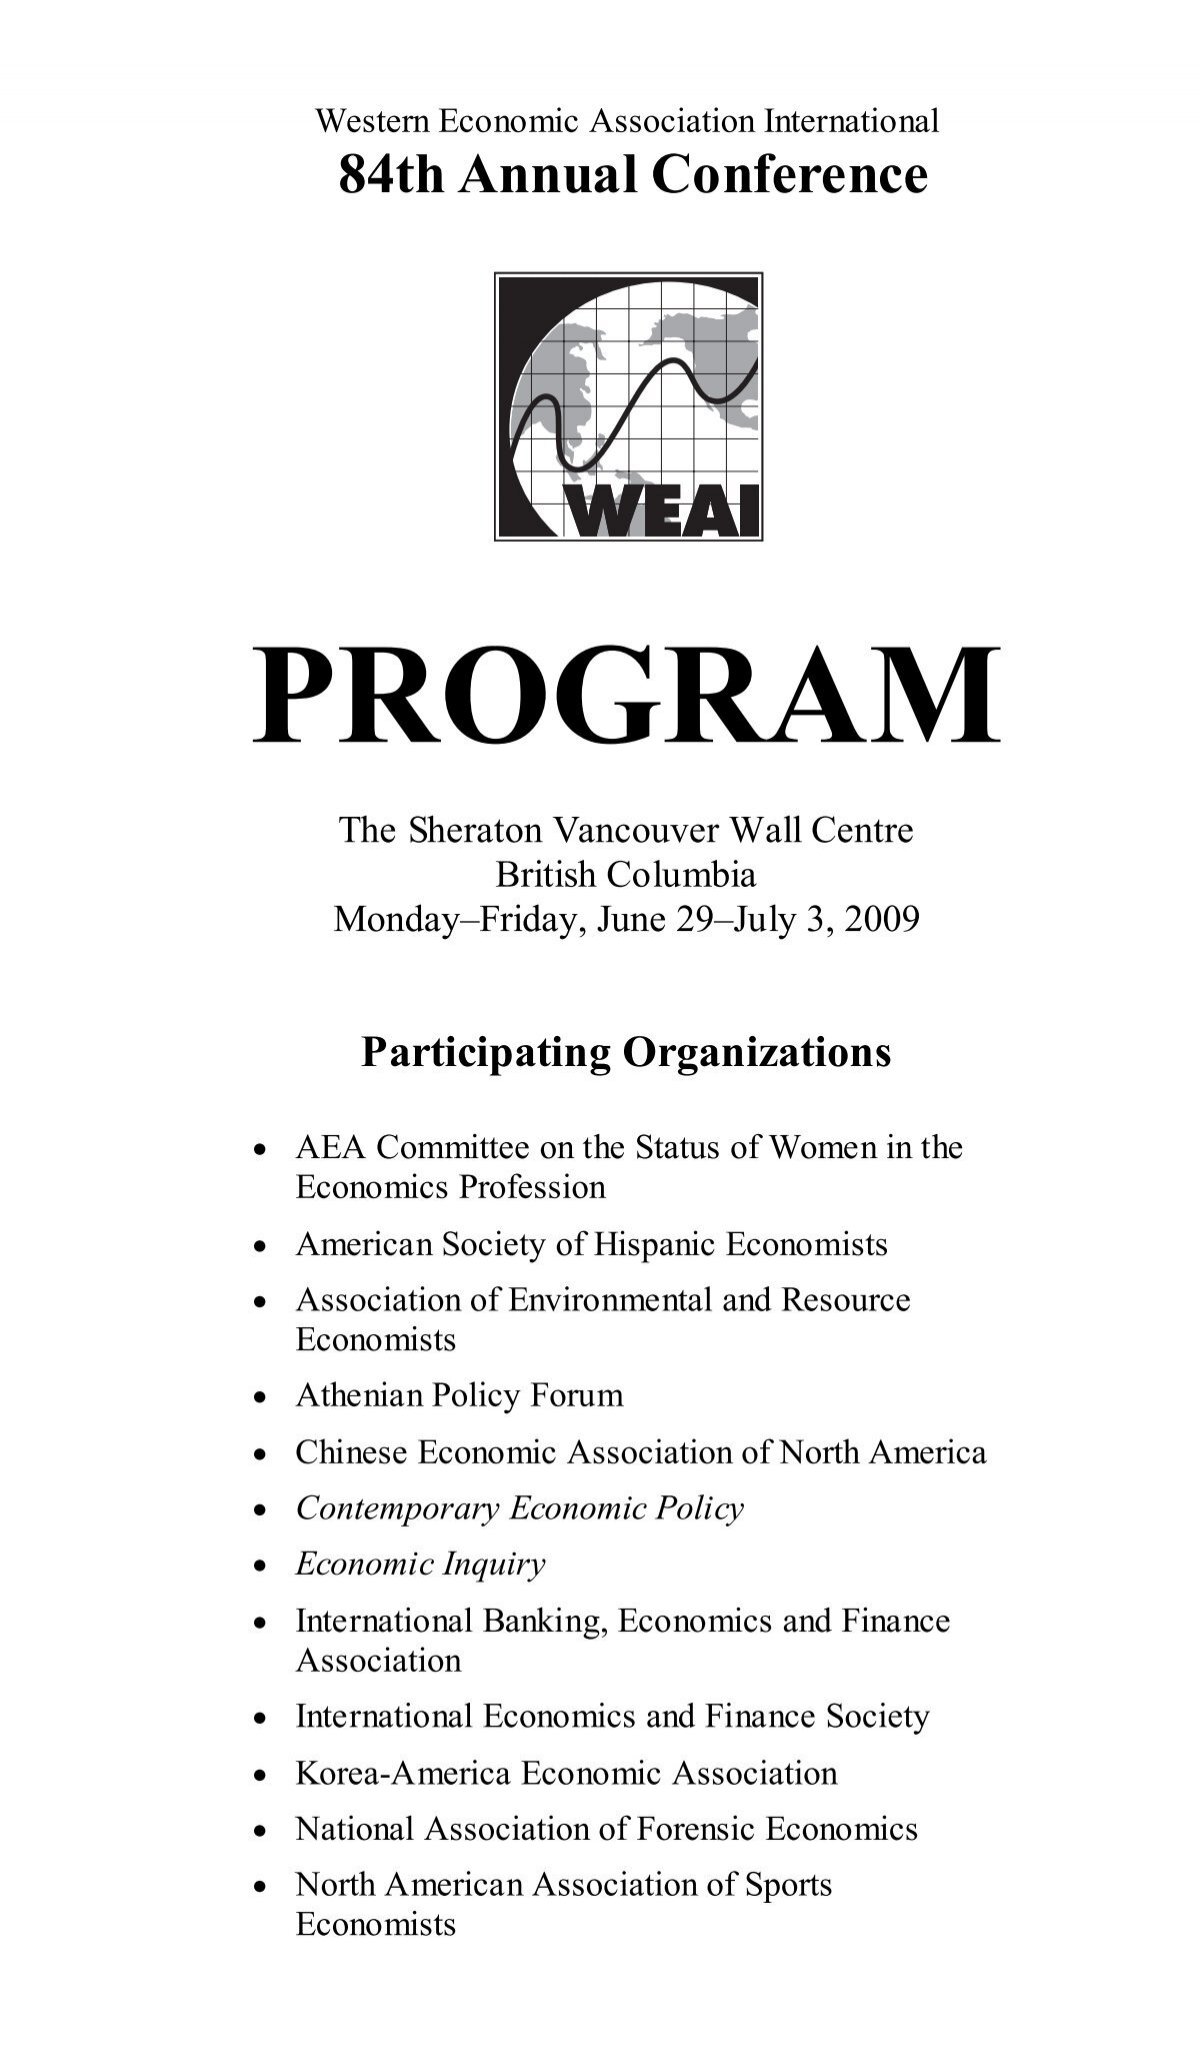 WEAI Program 2009 - Western Economic Association International